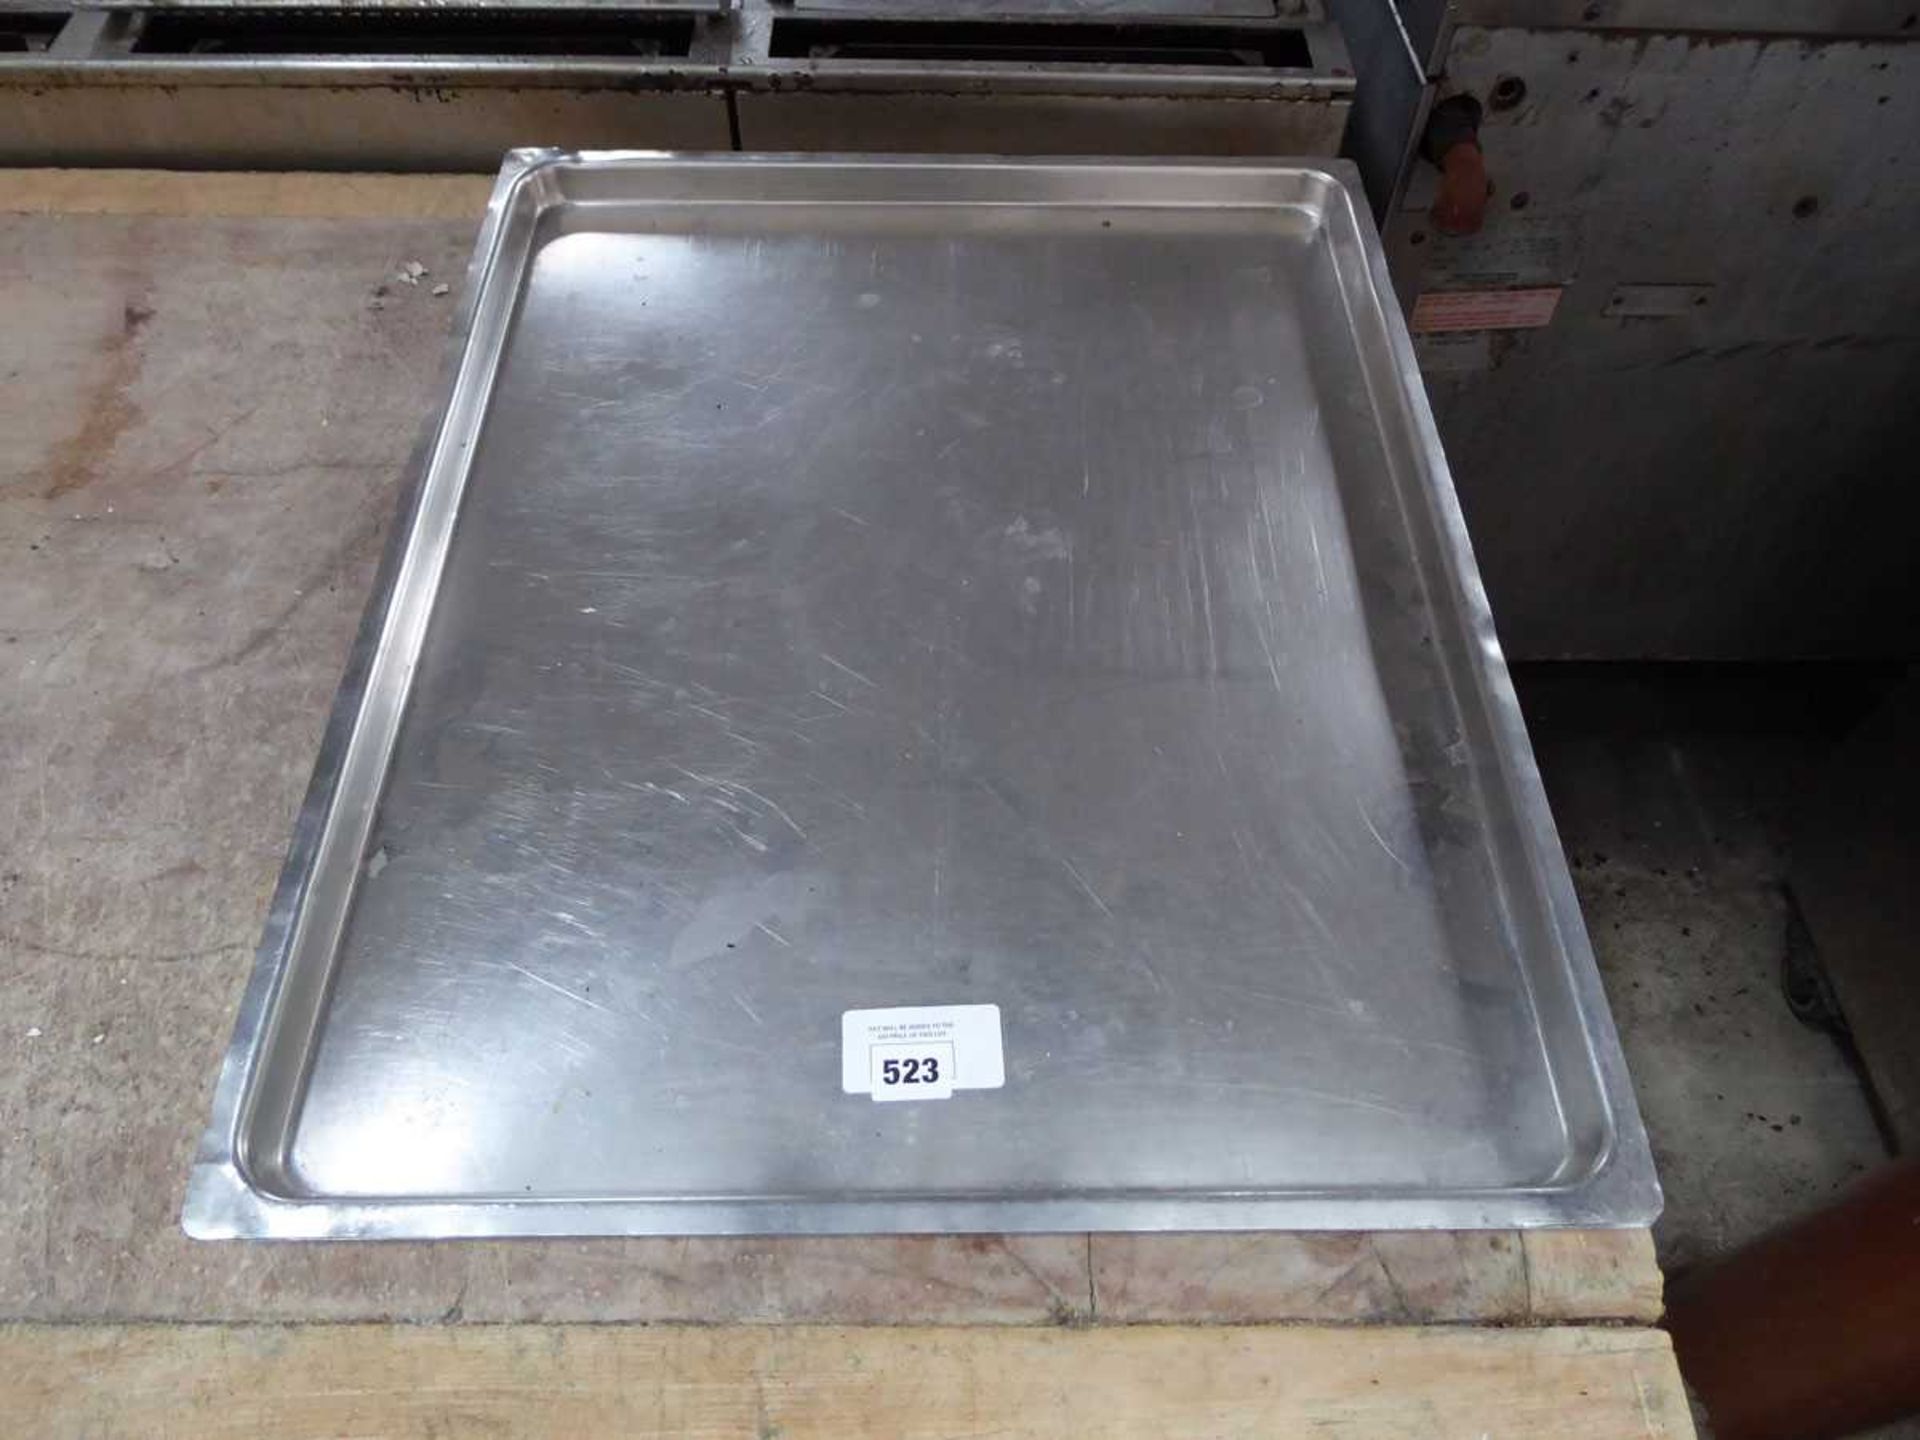 +VAT 2 large oven trays